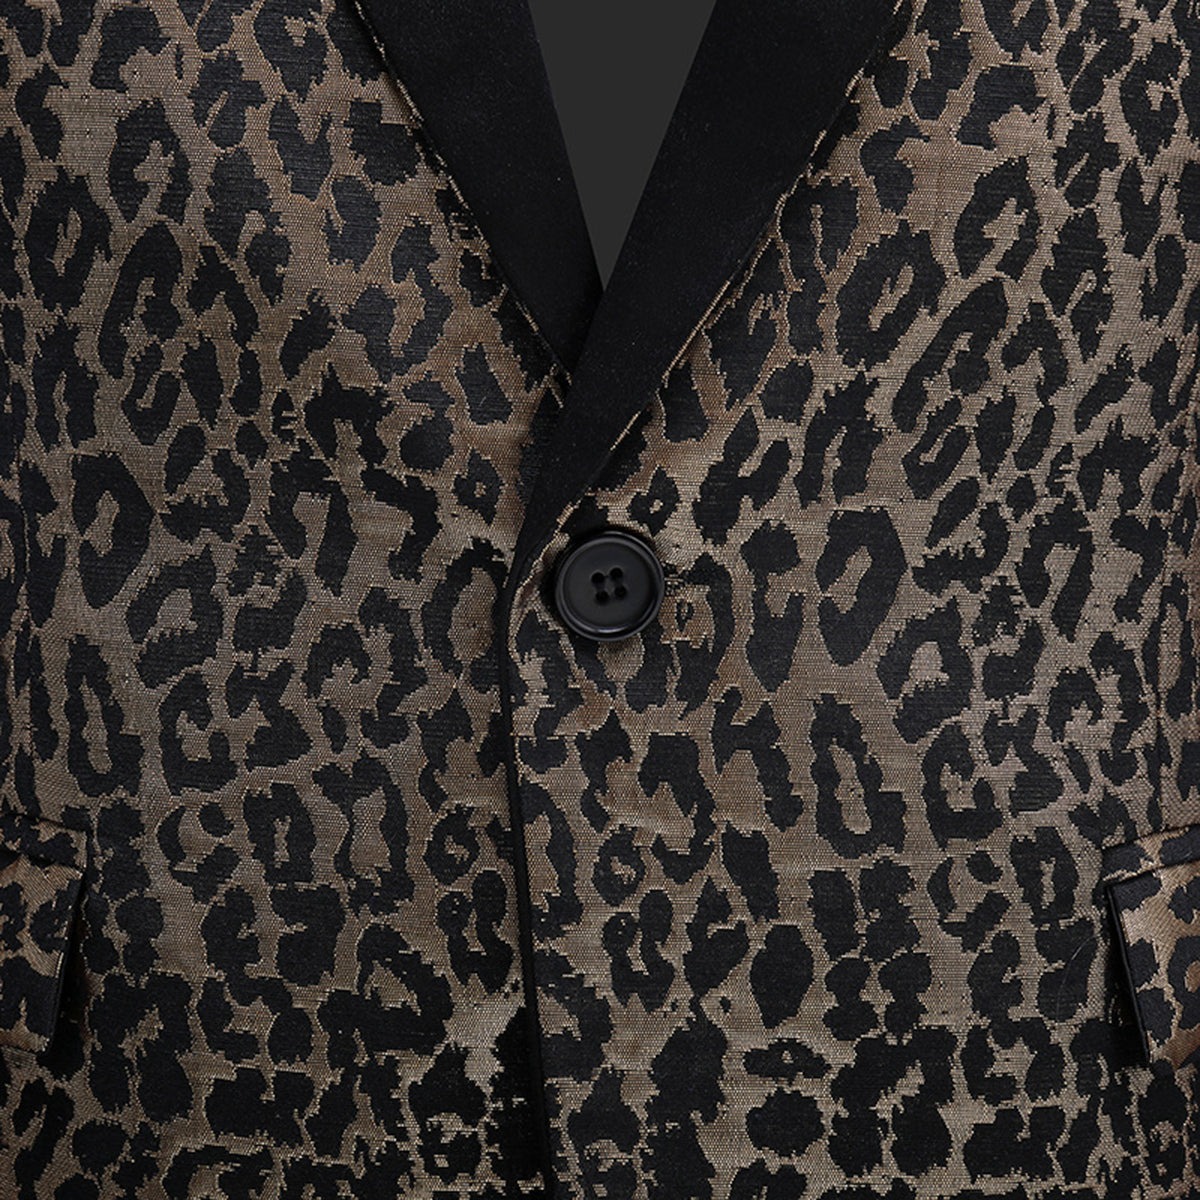 Leopard Print Slim Fit Casual Blazer Gold